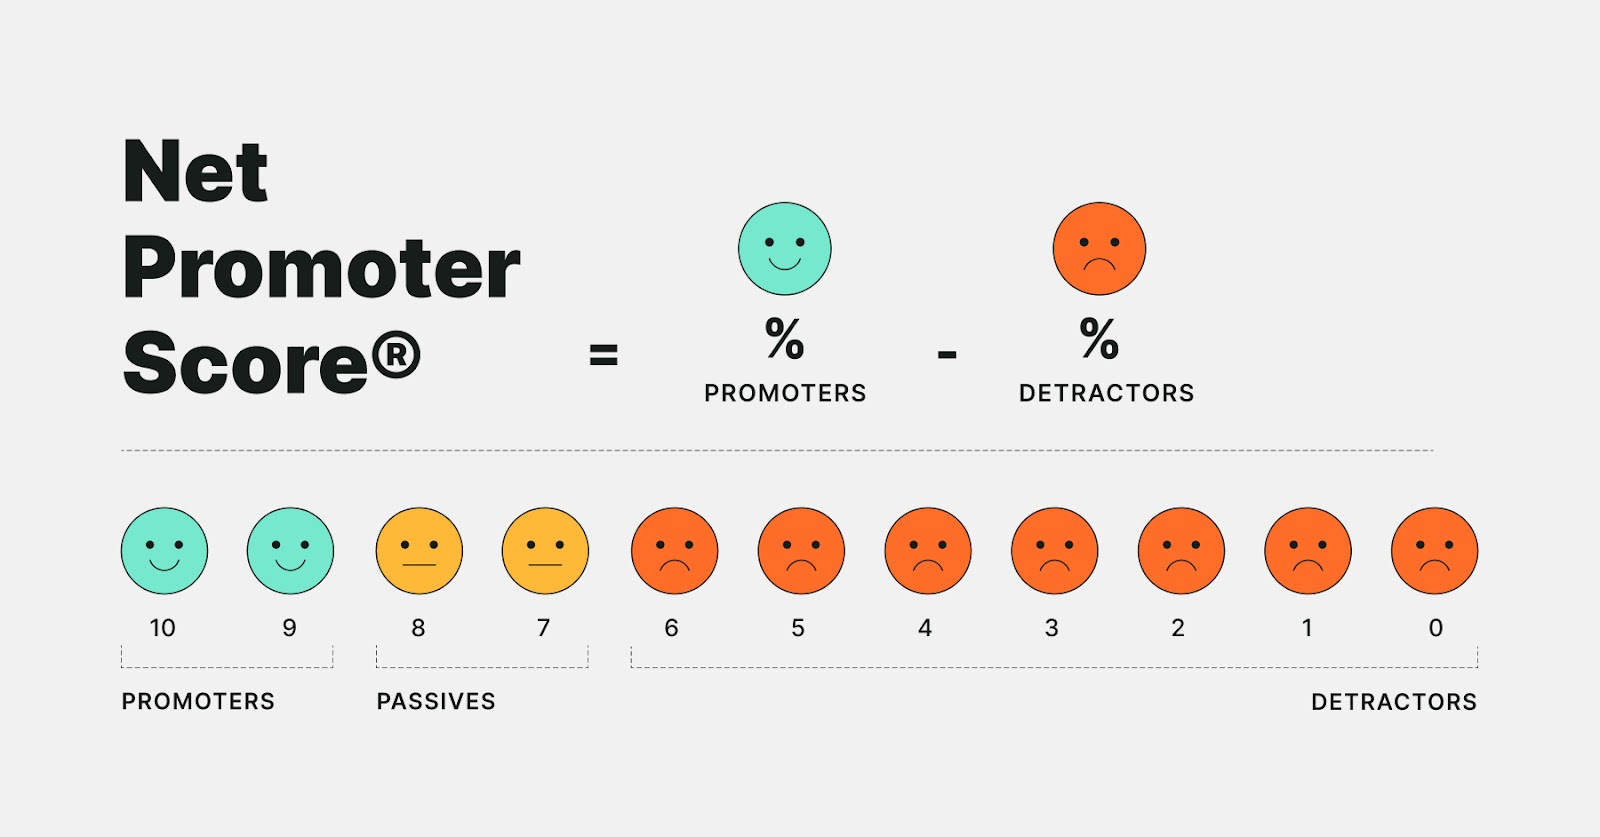 Net Promoter Score customer satisfaction metrics